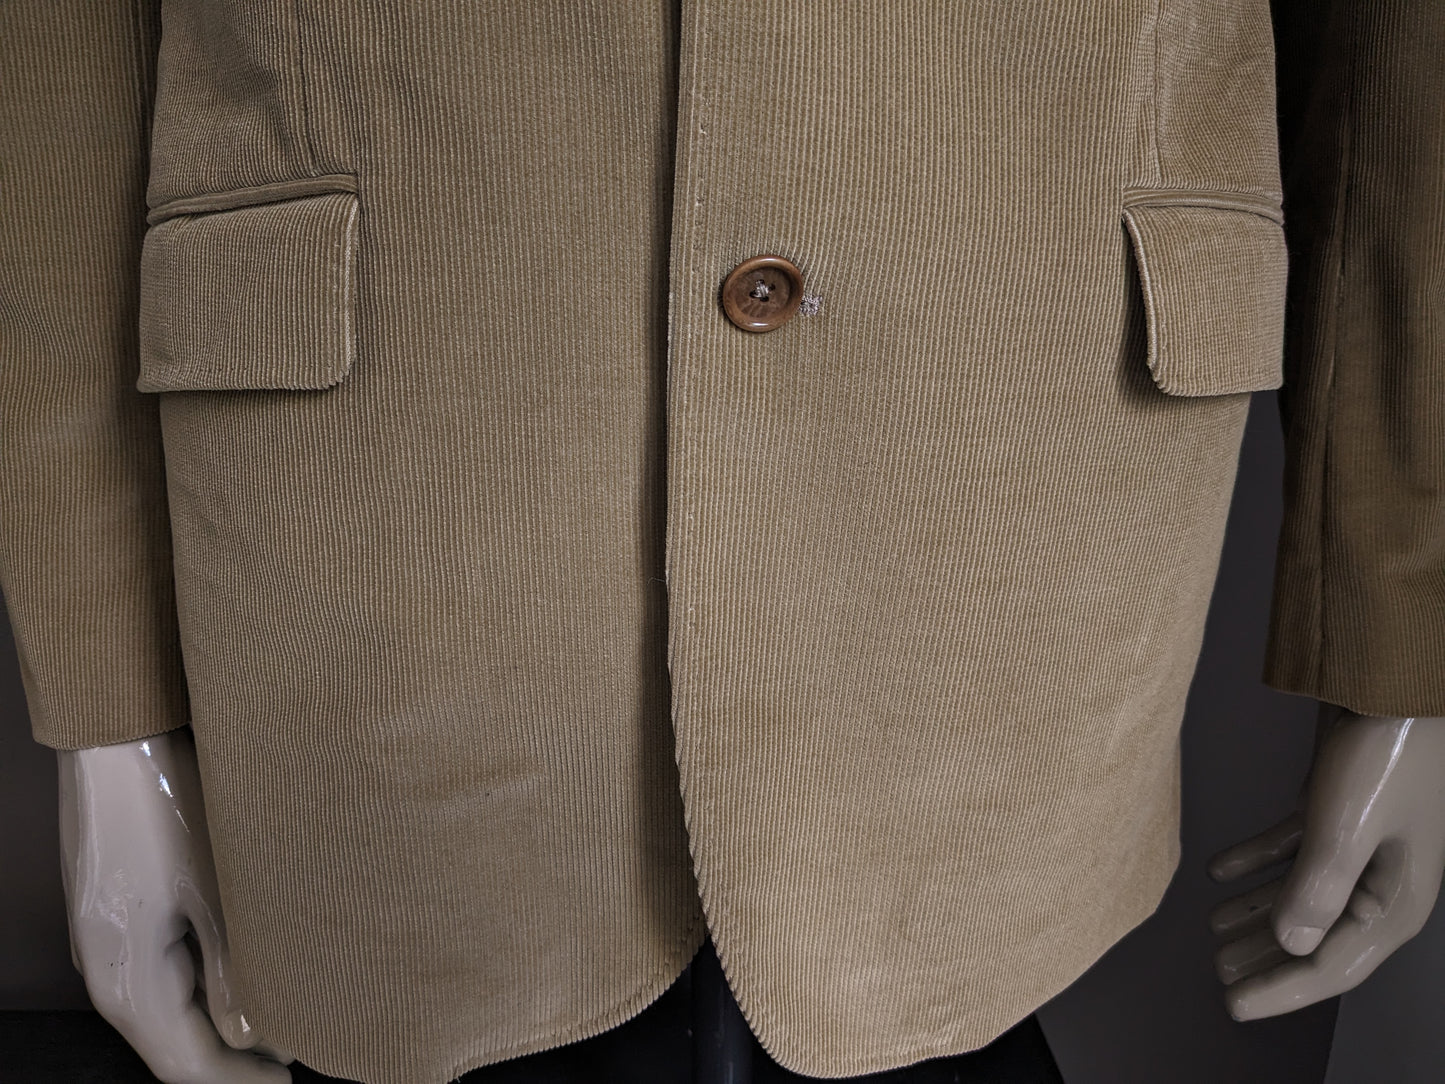 Massimo Dutti rib jacket. Light brown colored. Size 50 / M.